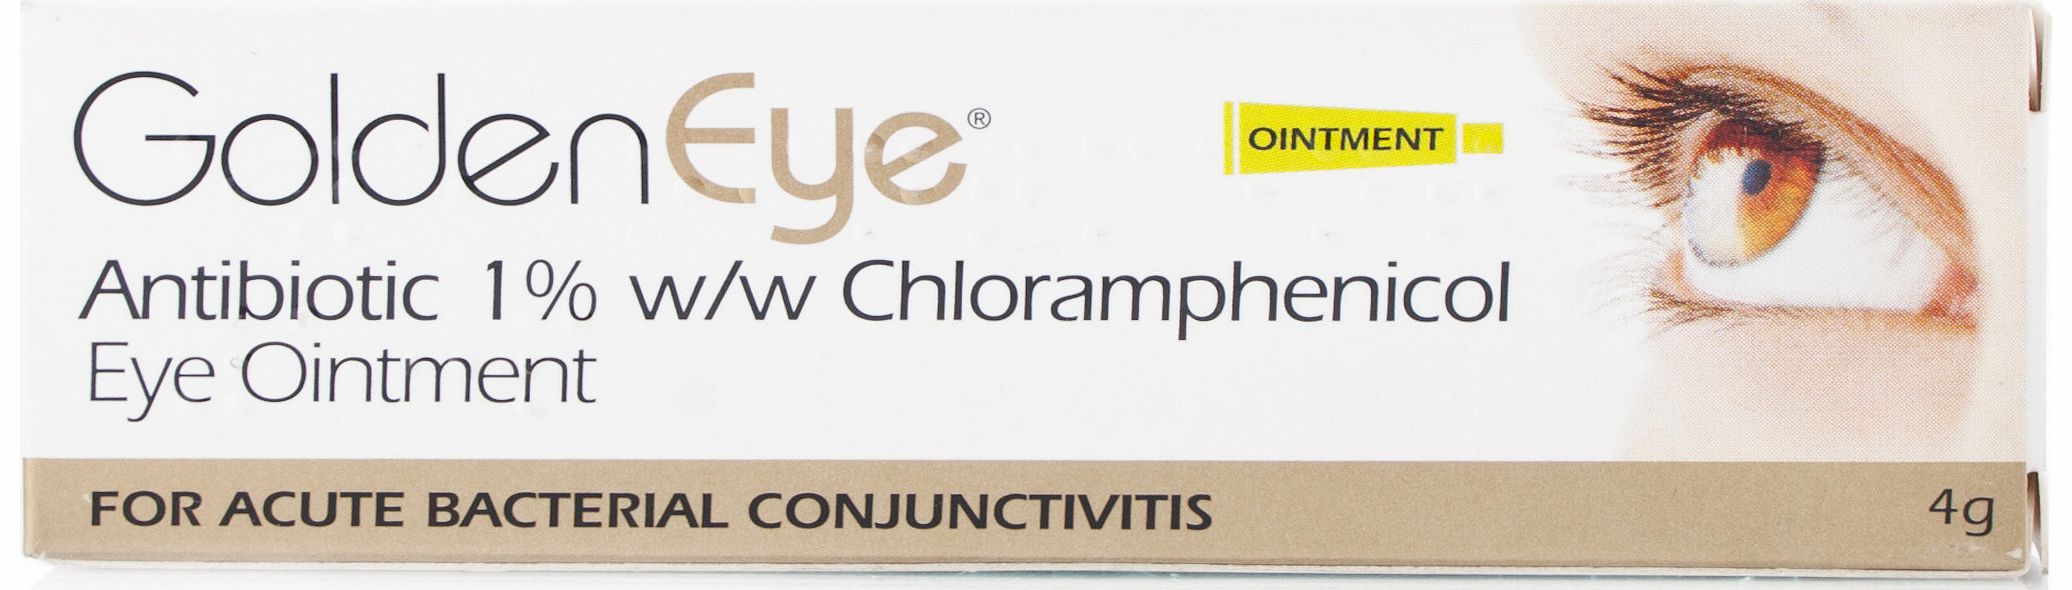 Golden Eye Chloramphenicol Eye Ointment